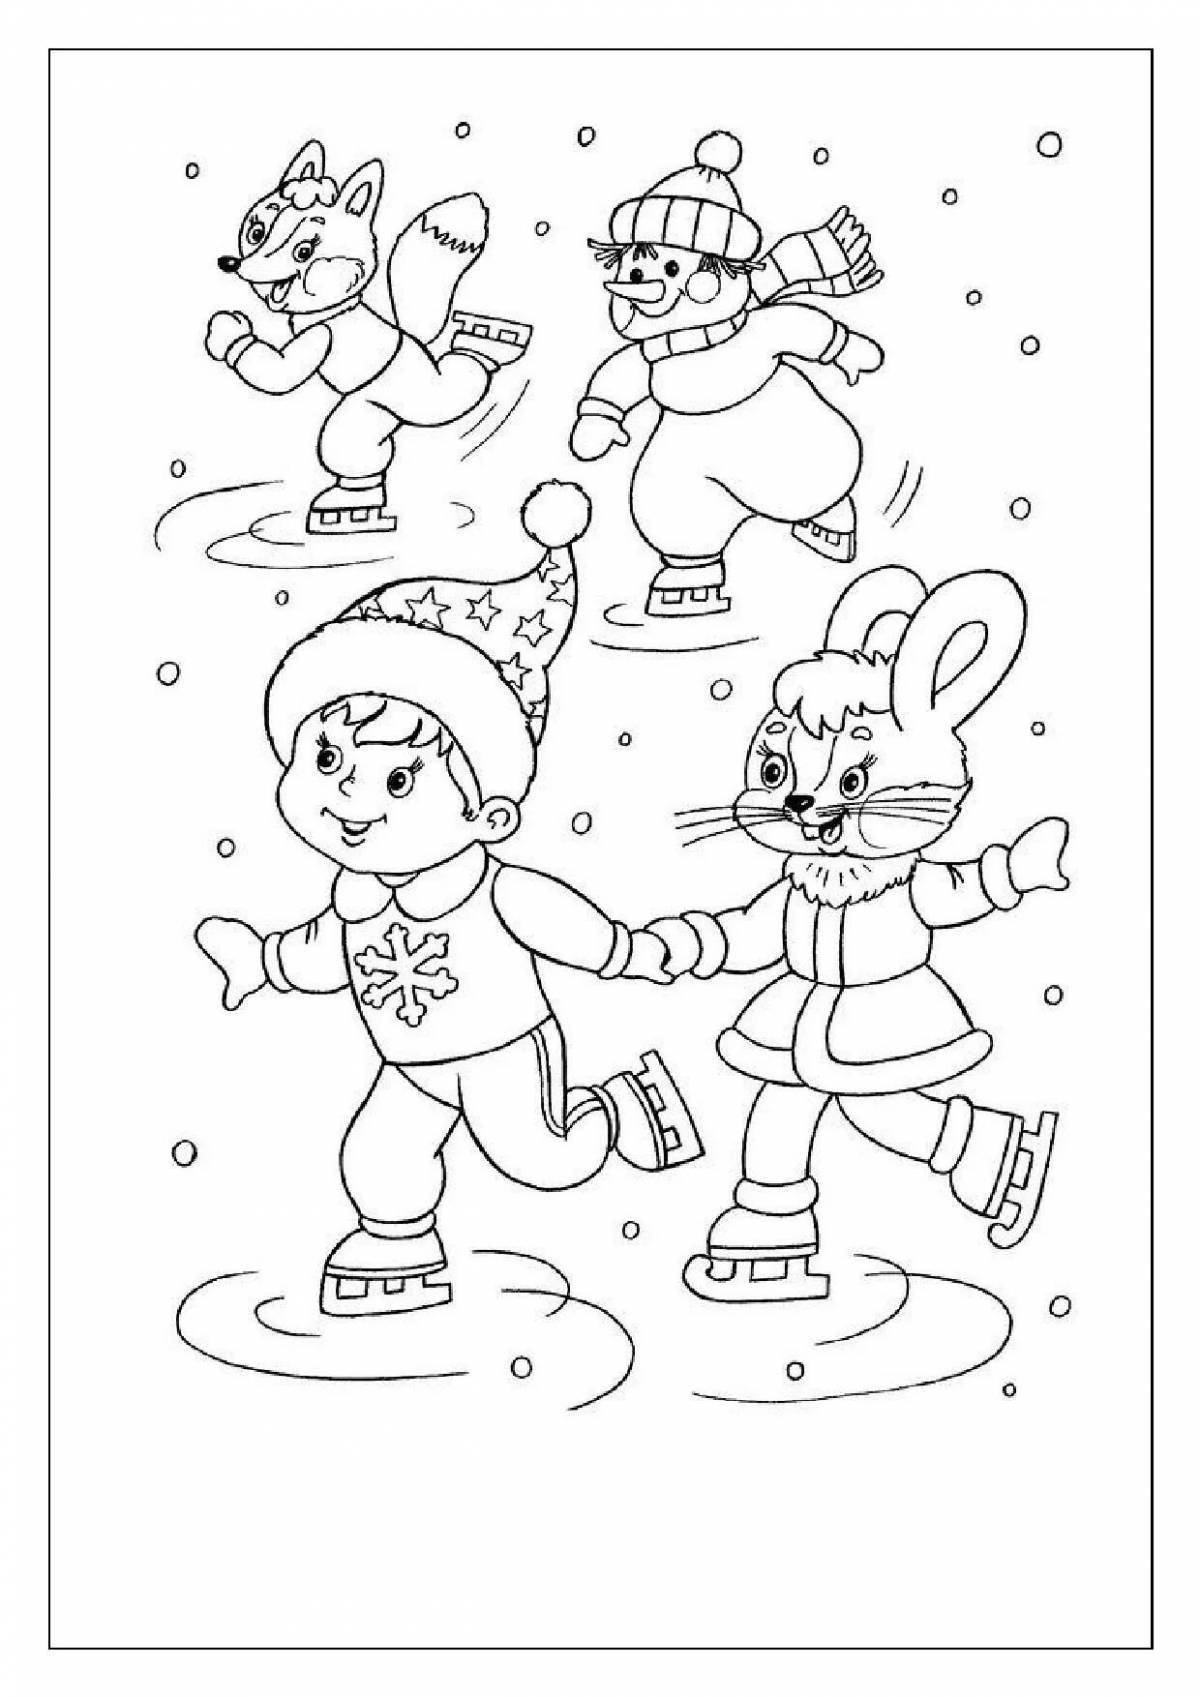 Animated coloring drawing winter fun preparatory group